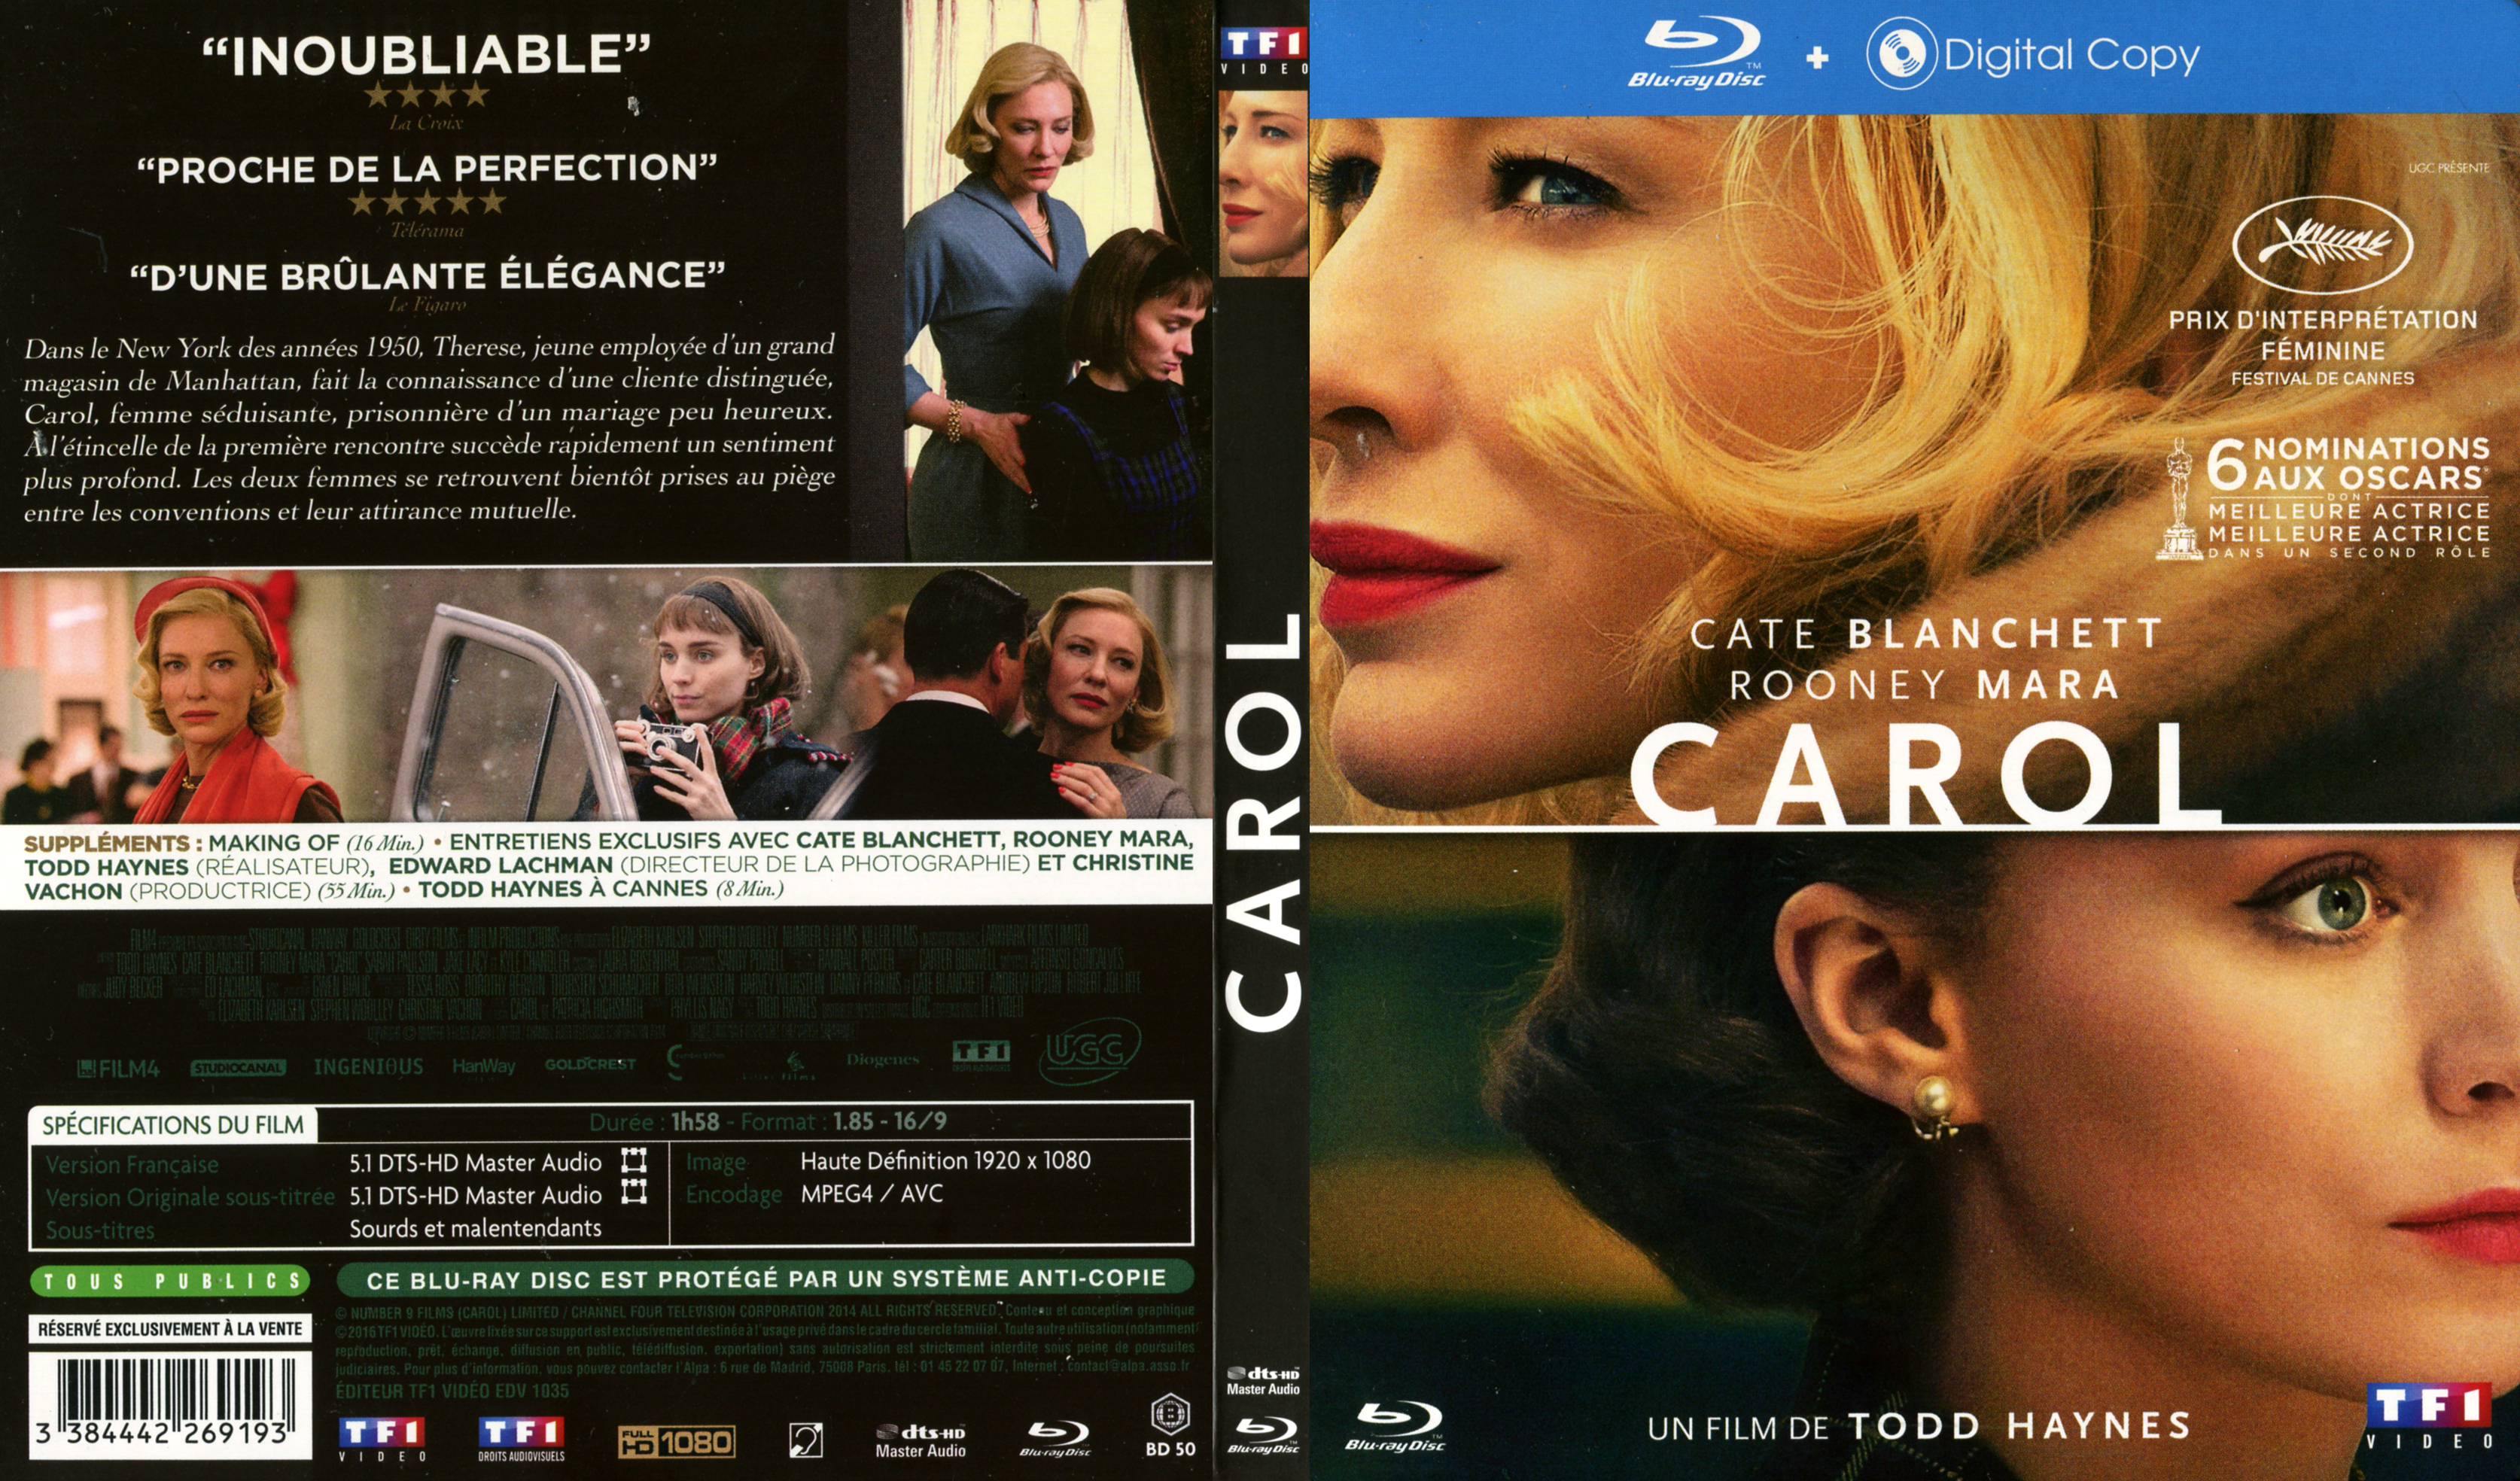 Jaquette DVD Carol (BLU-RAY) v2